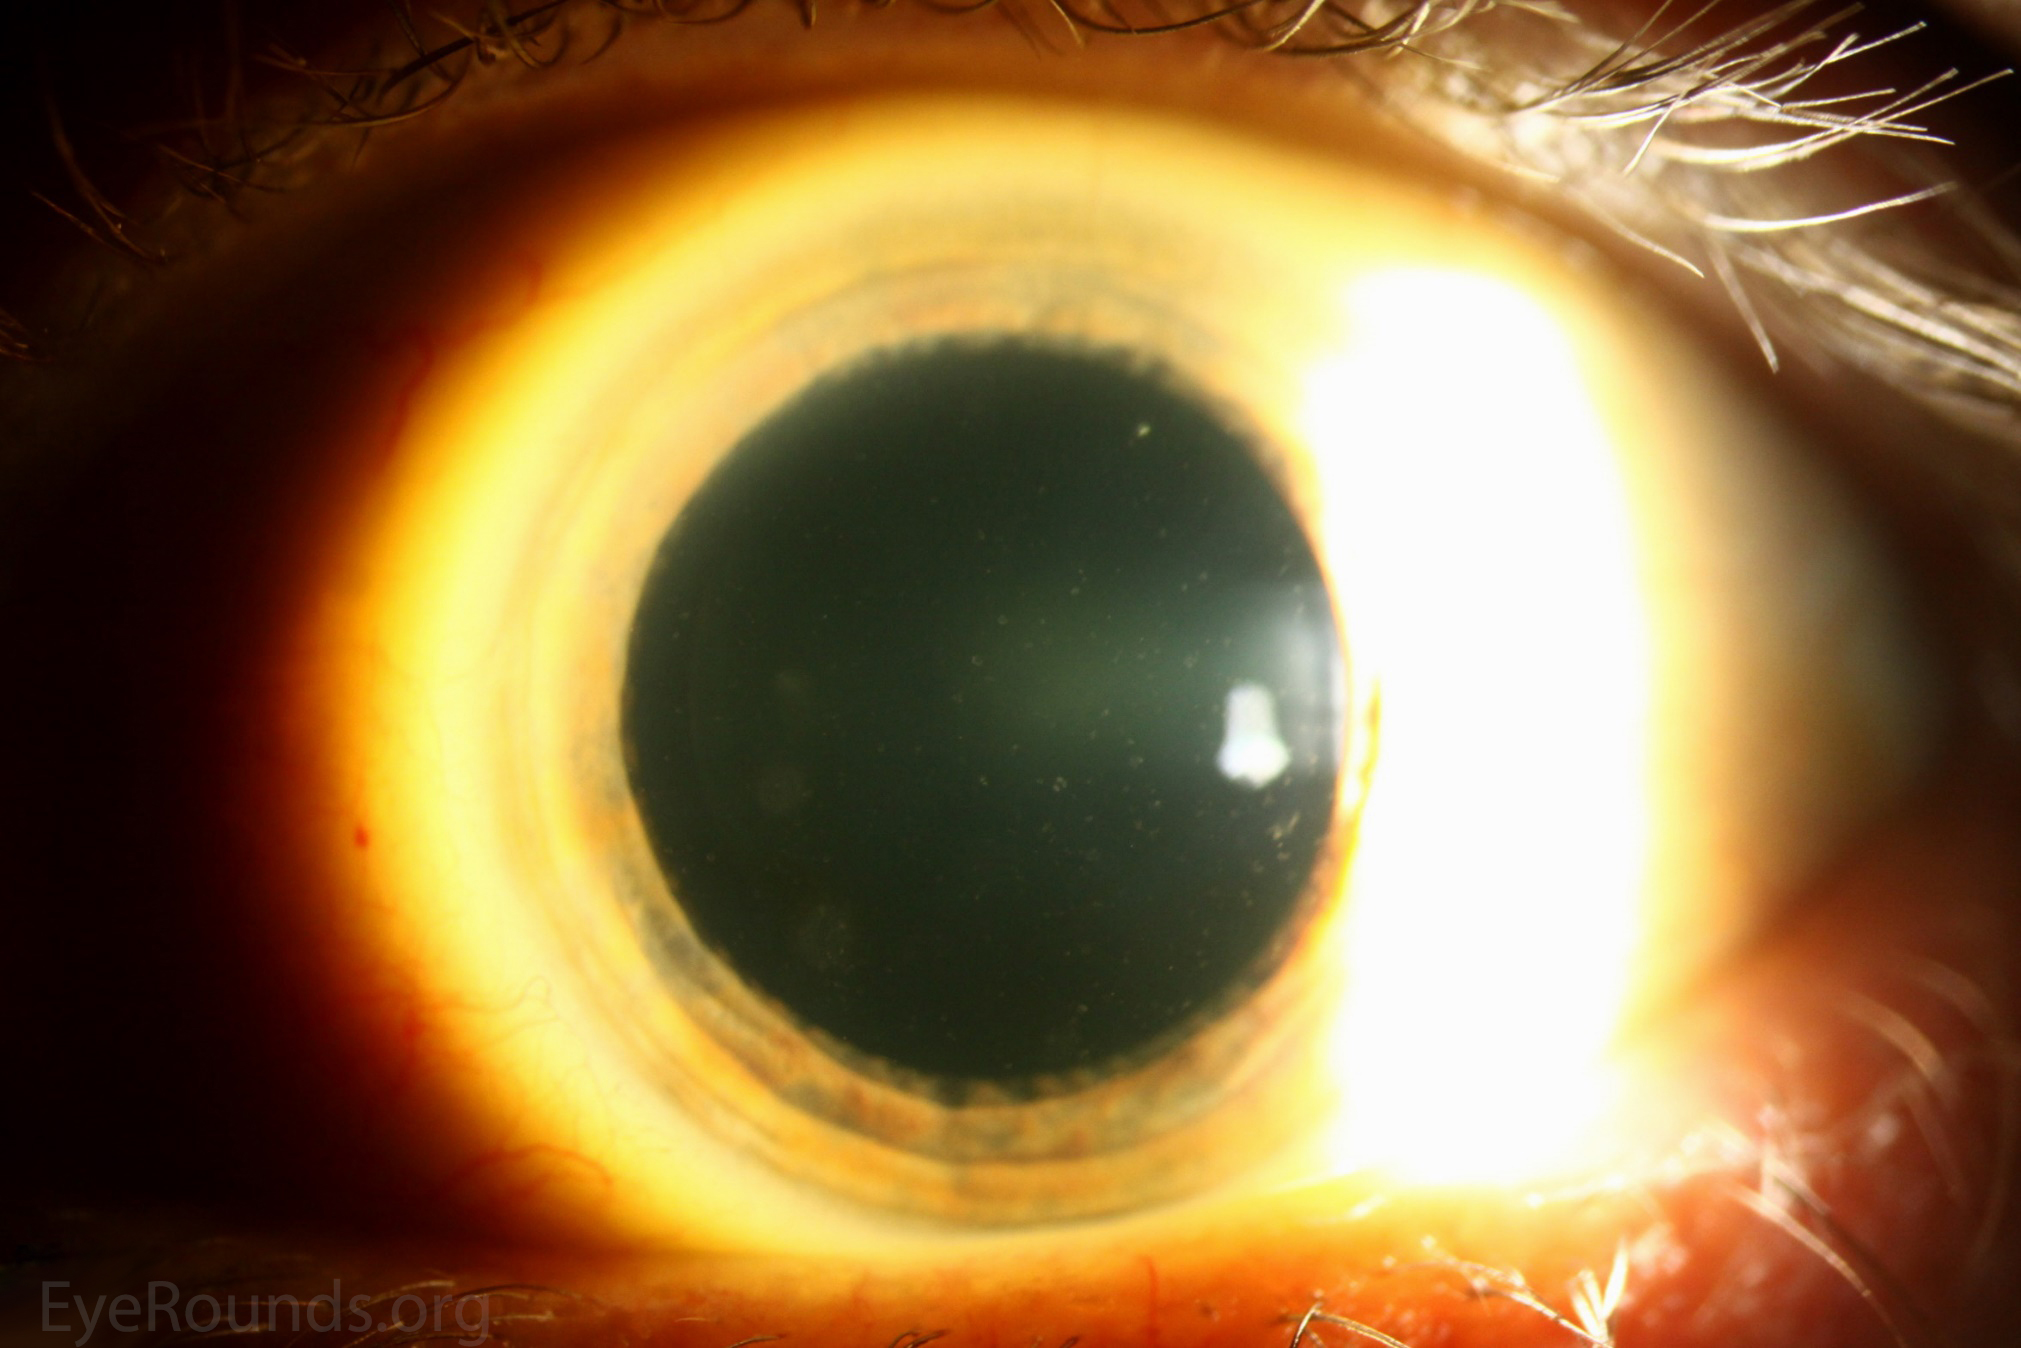 Fleck Corneal Dystrophy (a.k.a. Francois-Neetens speckled corneal dystrophy